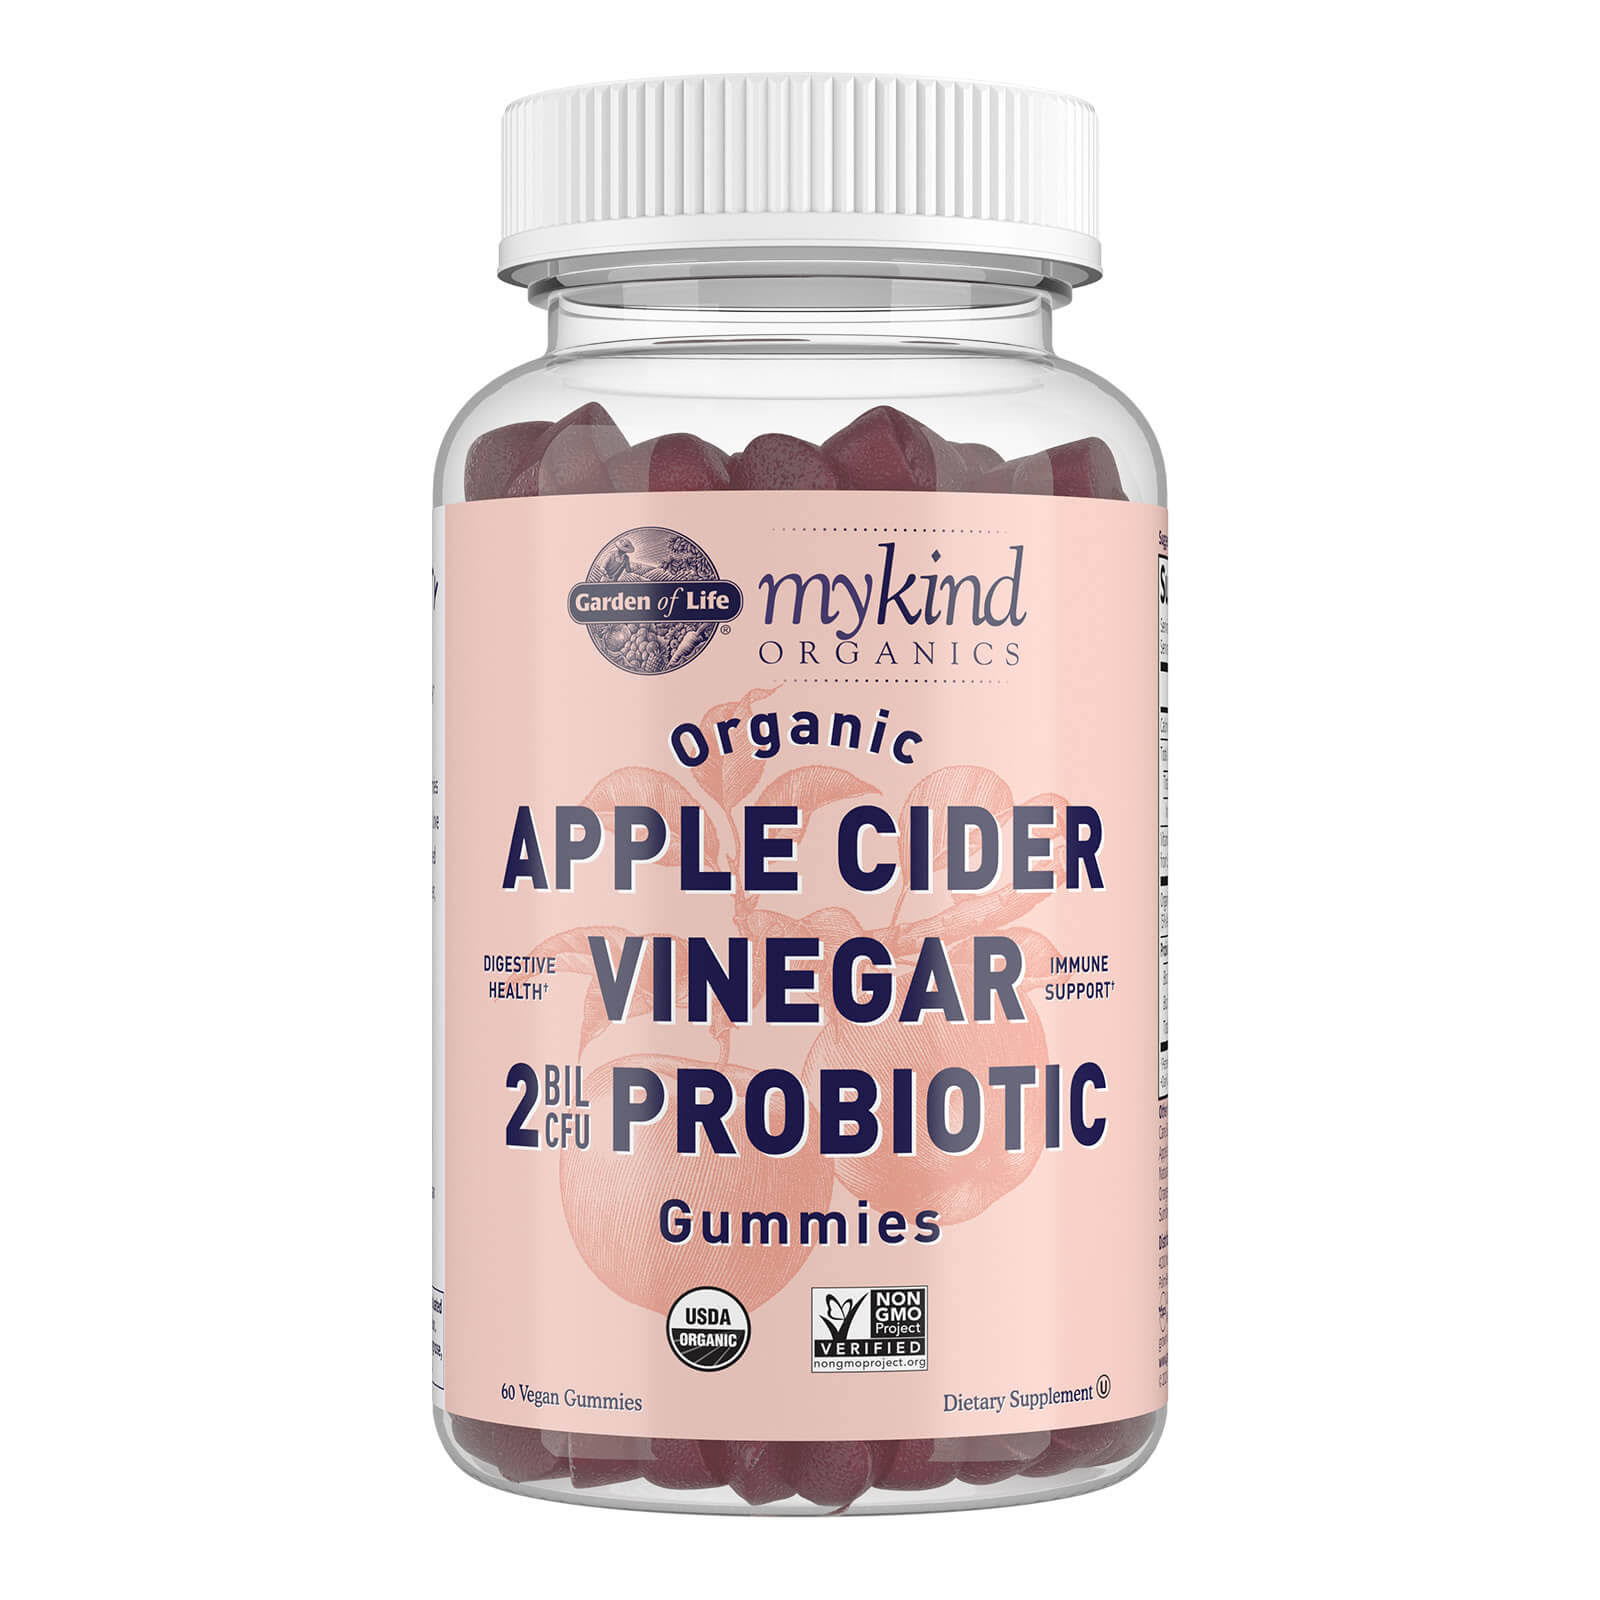 Garden of Life, MyKind Organics, Apple Cider Vinegar Probiotic Gummies